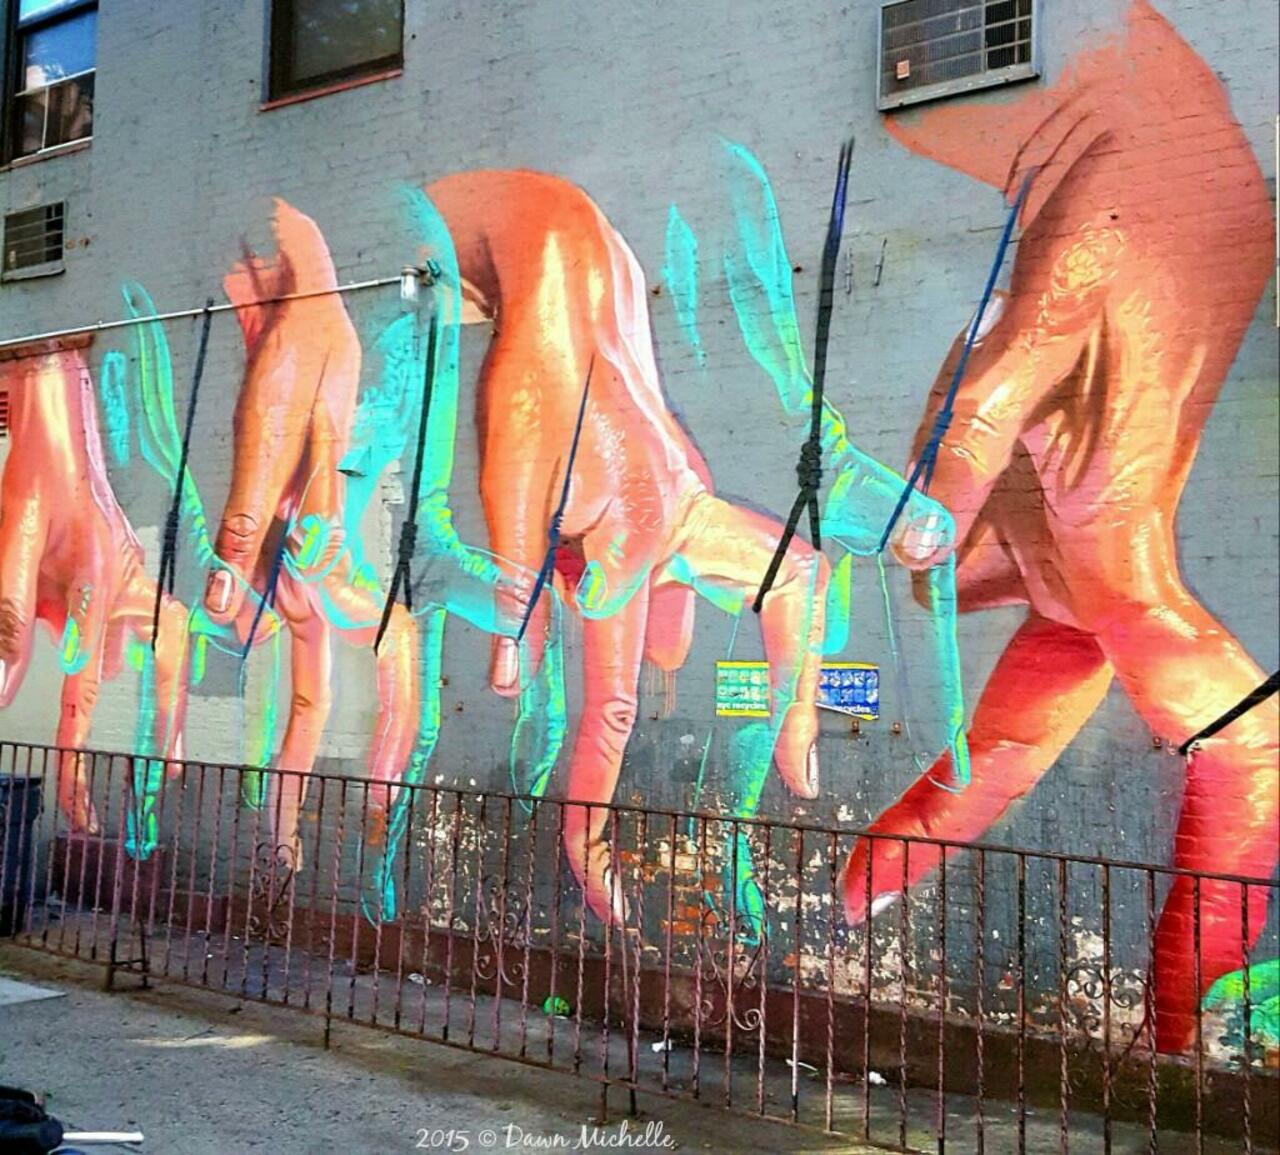 By @case_maclaim #nyc #streetart #graffiti #graff #art @globalgraff @circumjacent @MadeInManchestr @GraffitiFeed https://t.co/mdMBWrb8YR